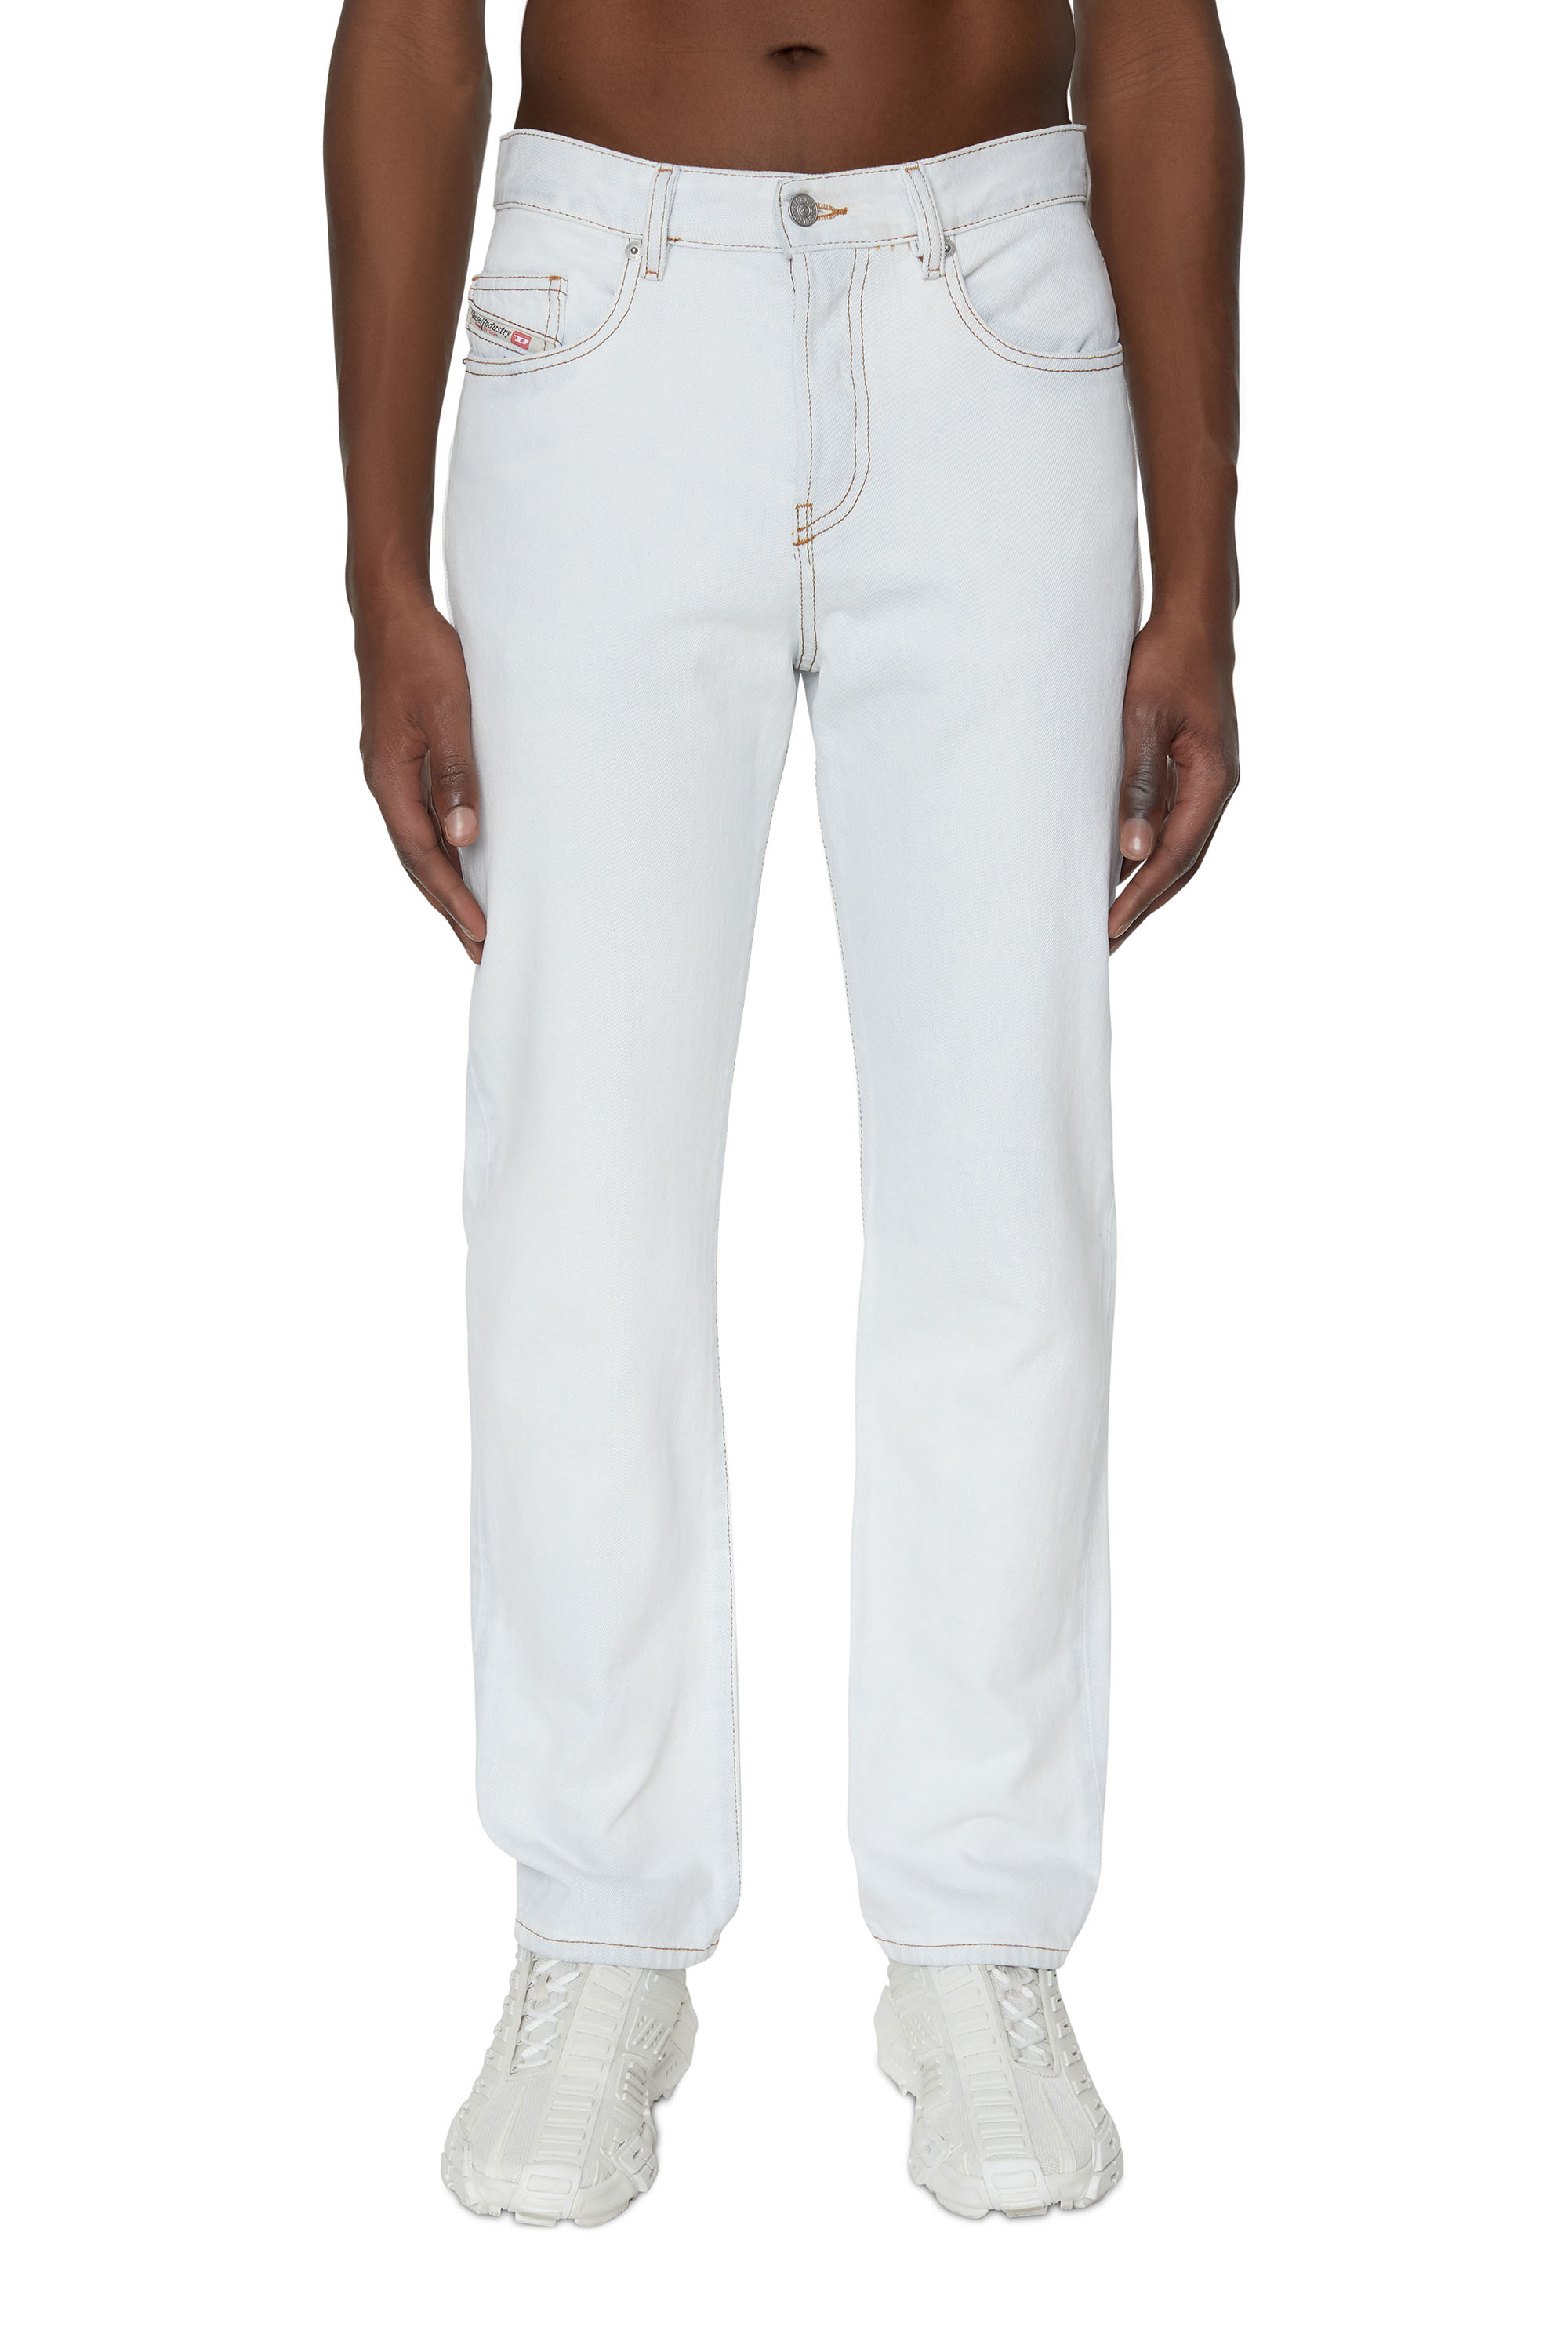 2020 D-VIKER 007H5 Straight Jeans, White - Jeans